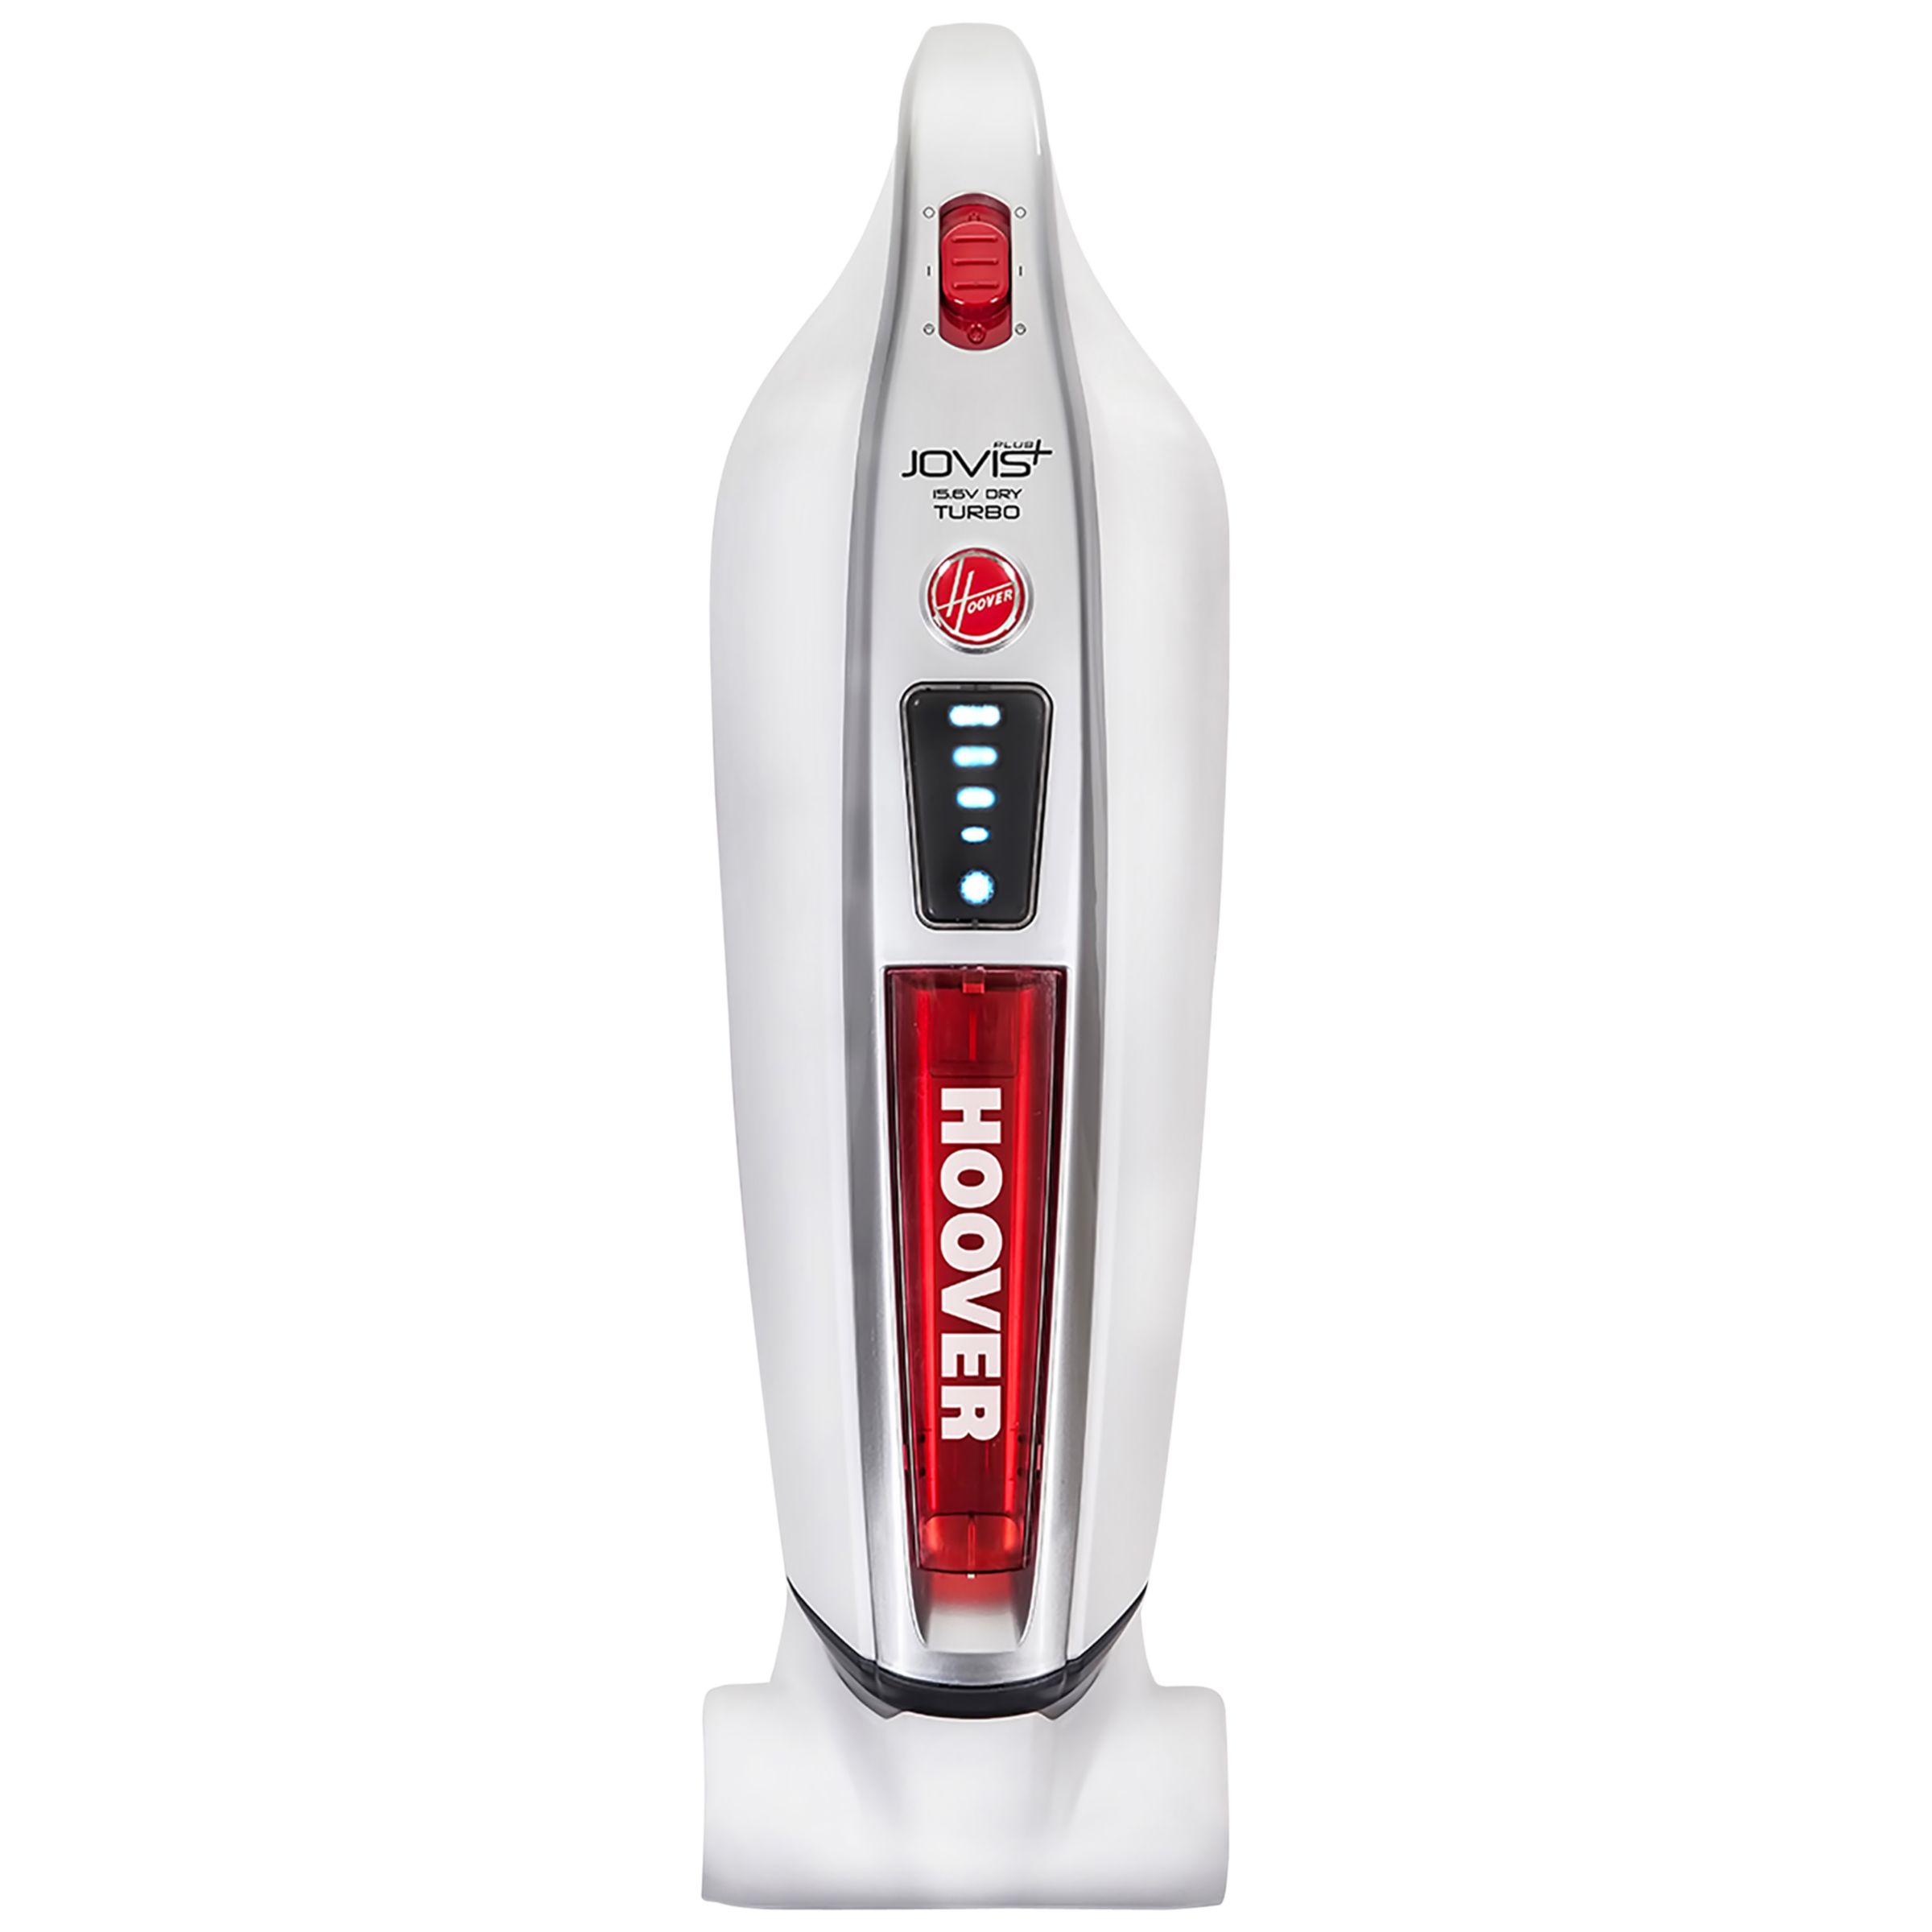 Hoover SM156DPN Jovis Plus 15.6V Cordless Handheld Vacuum Cleaner in White/Red